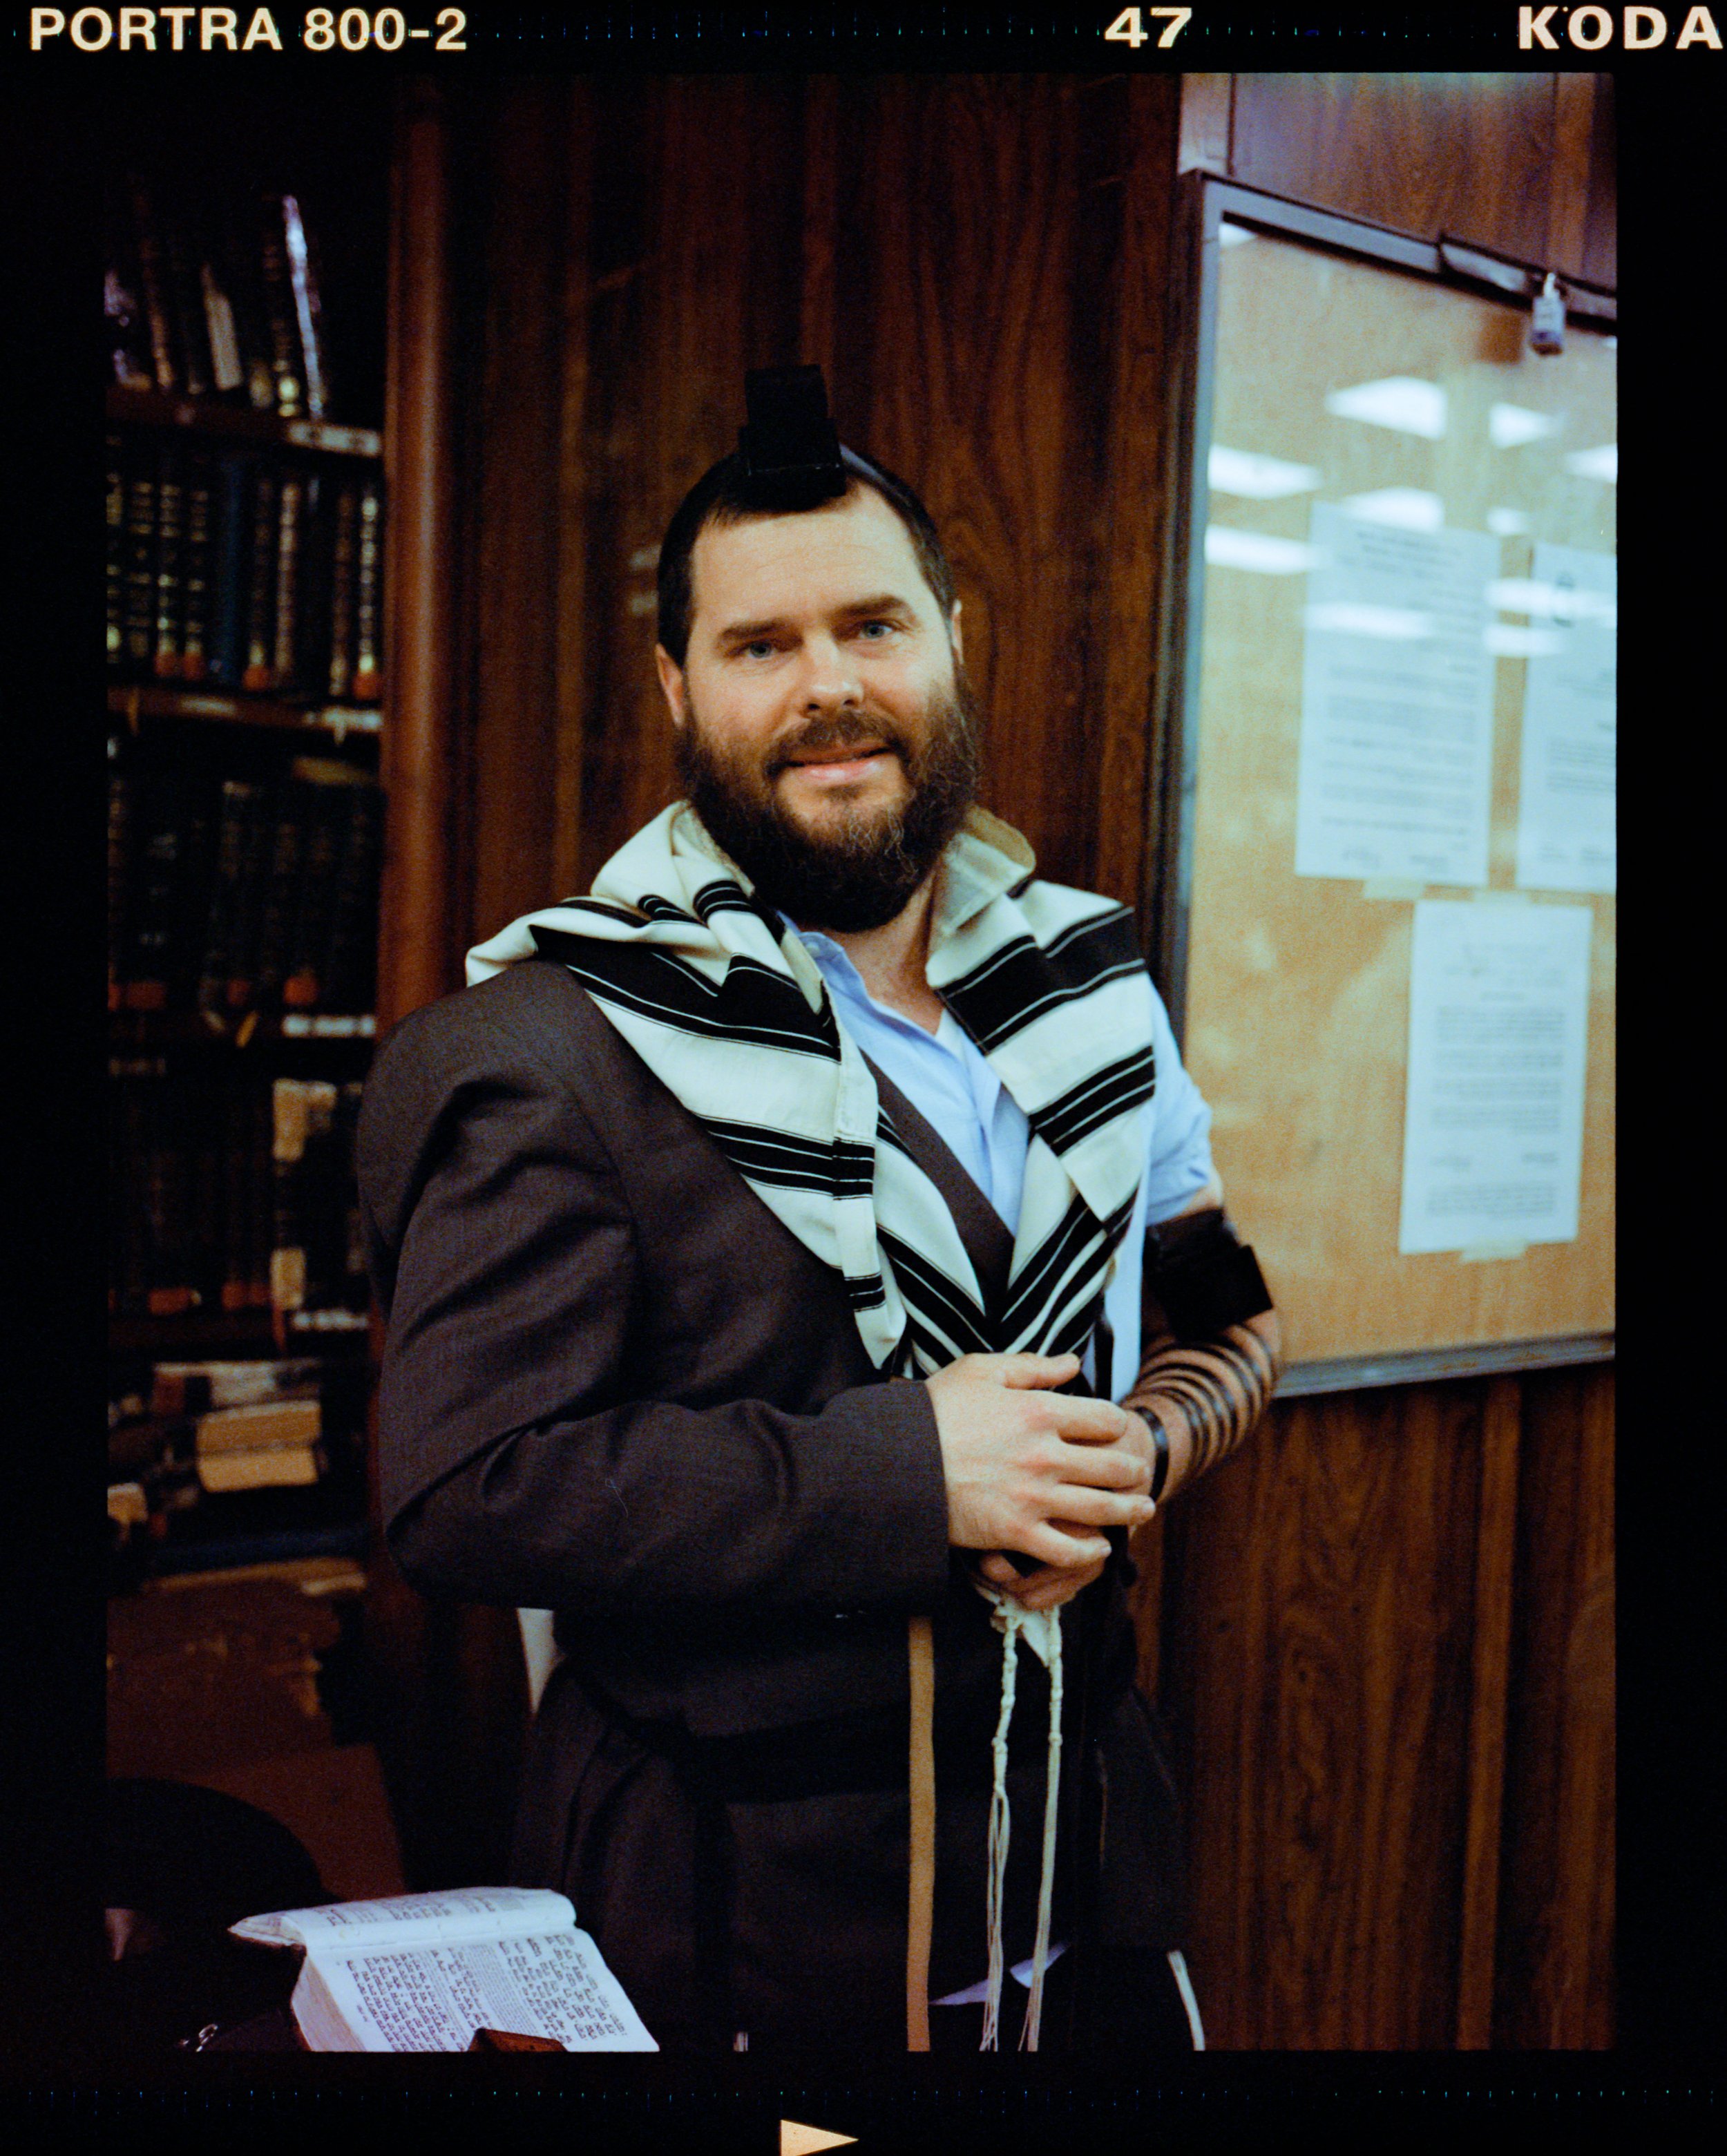 Hanigng with Hasidic - Documentary Photography